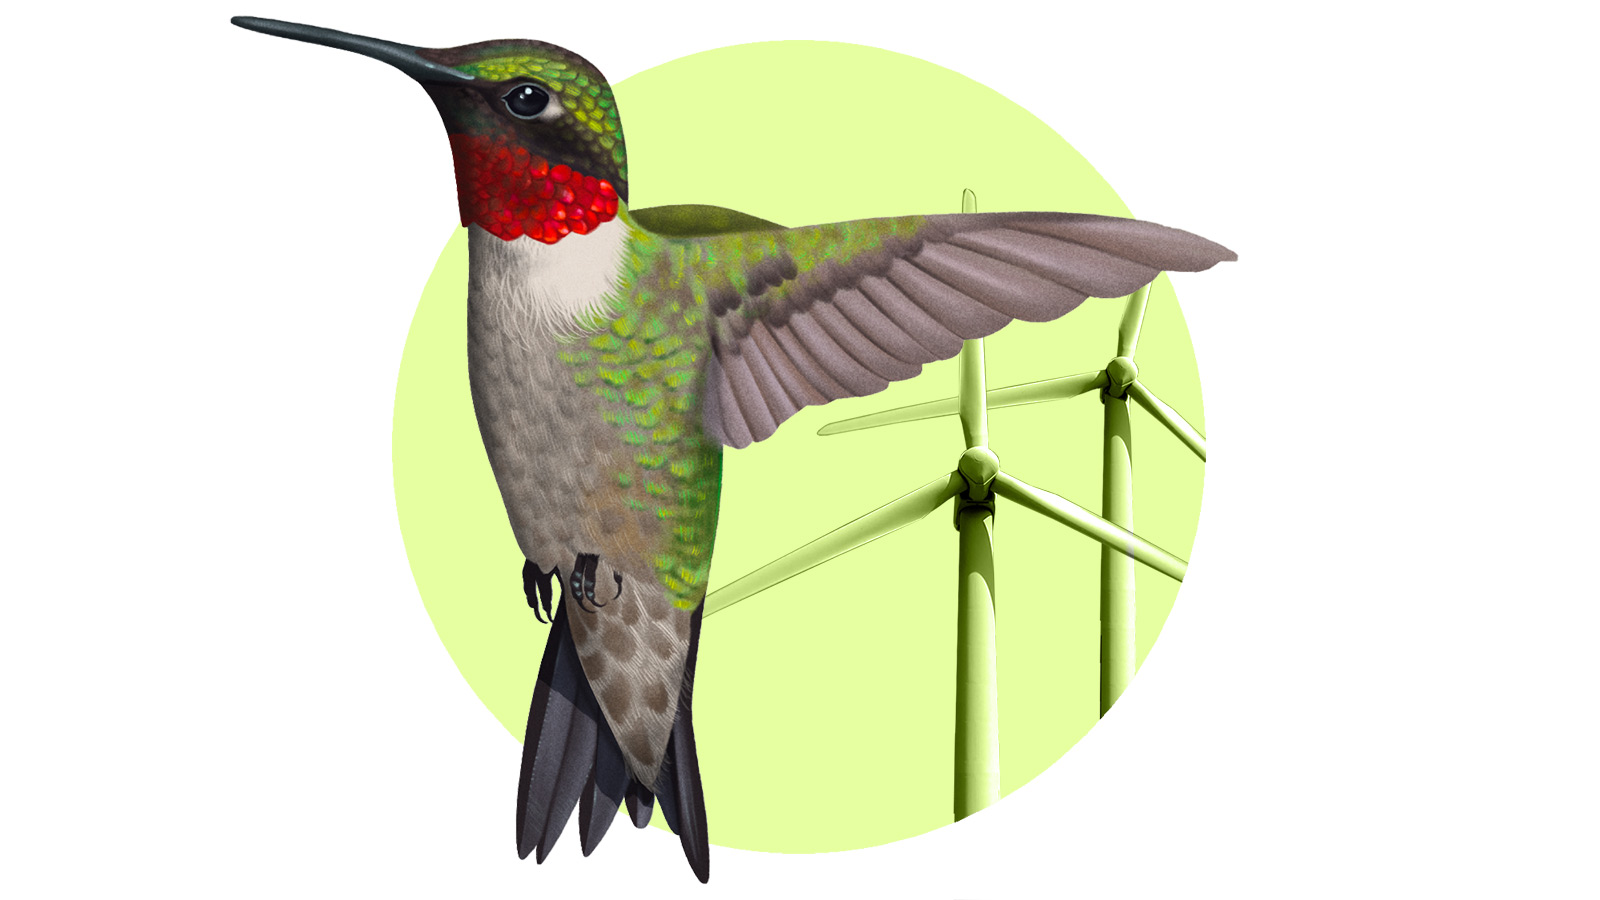 Turbine project unnerves some bird advocates